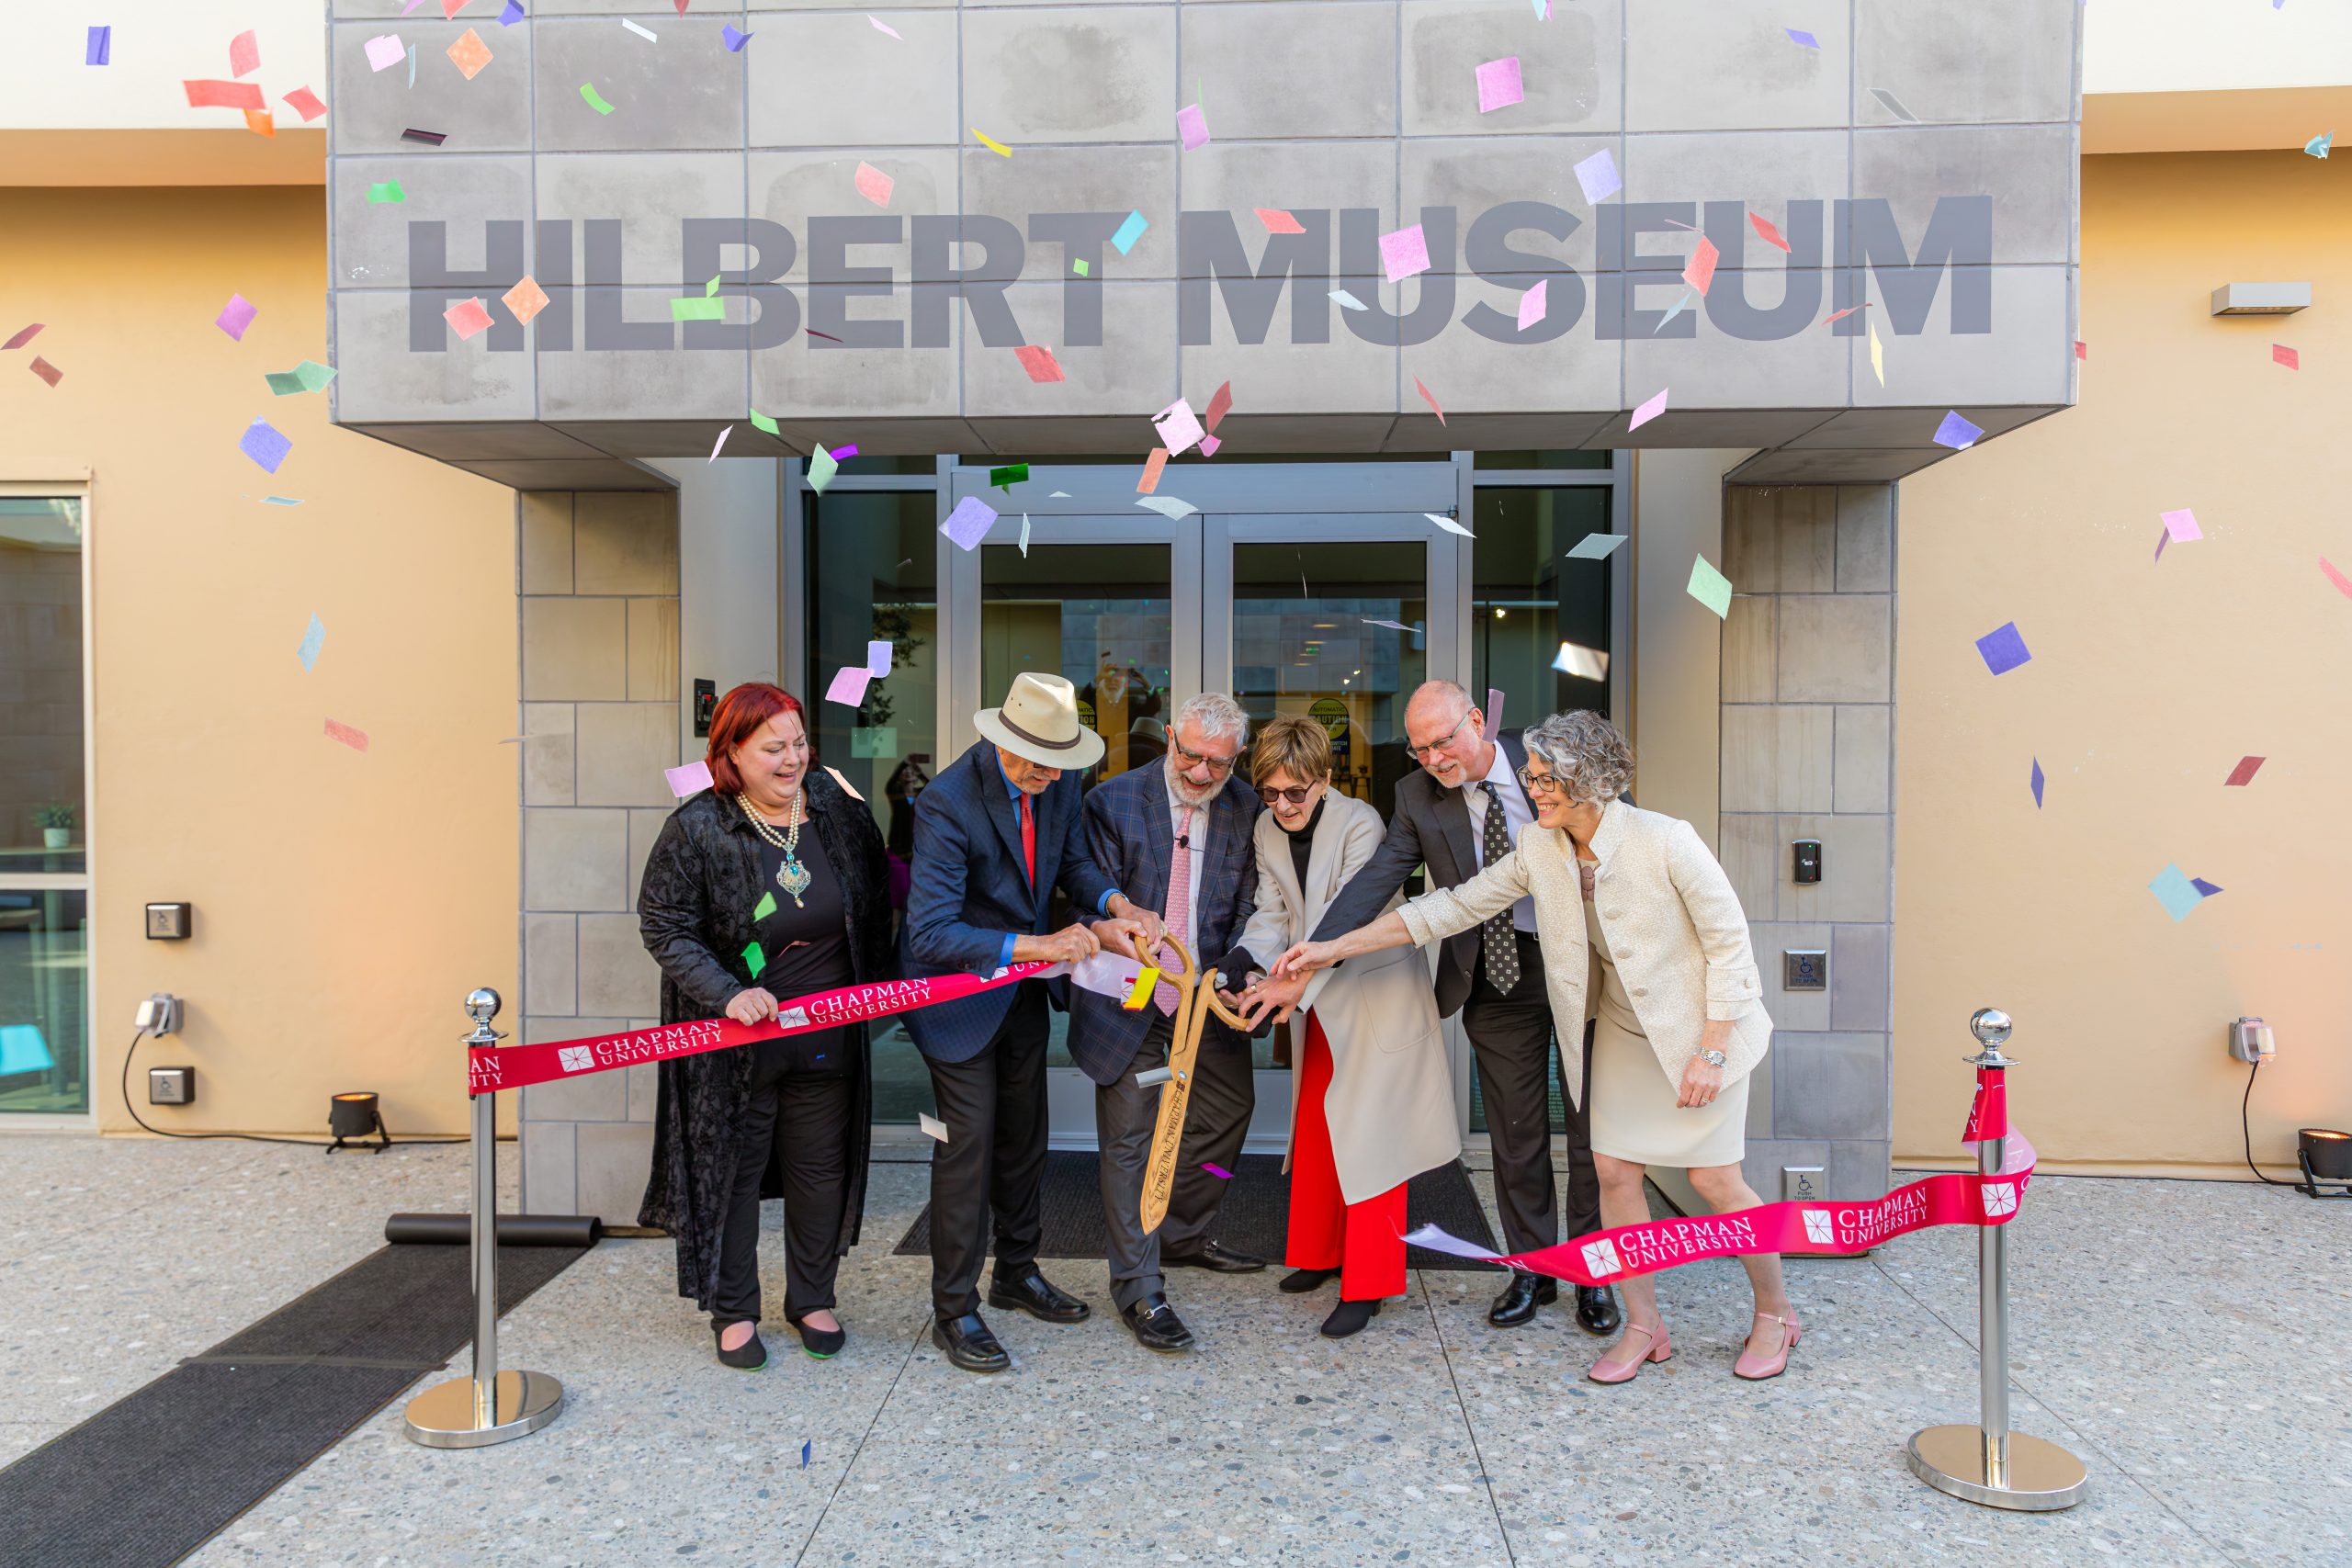 The Hilbert Museum